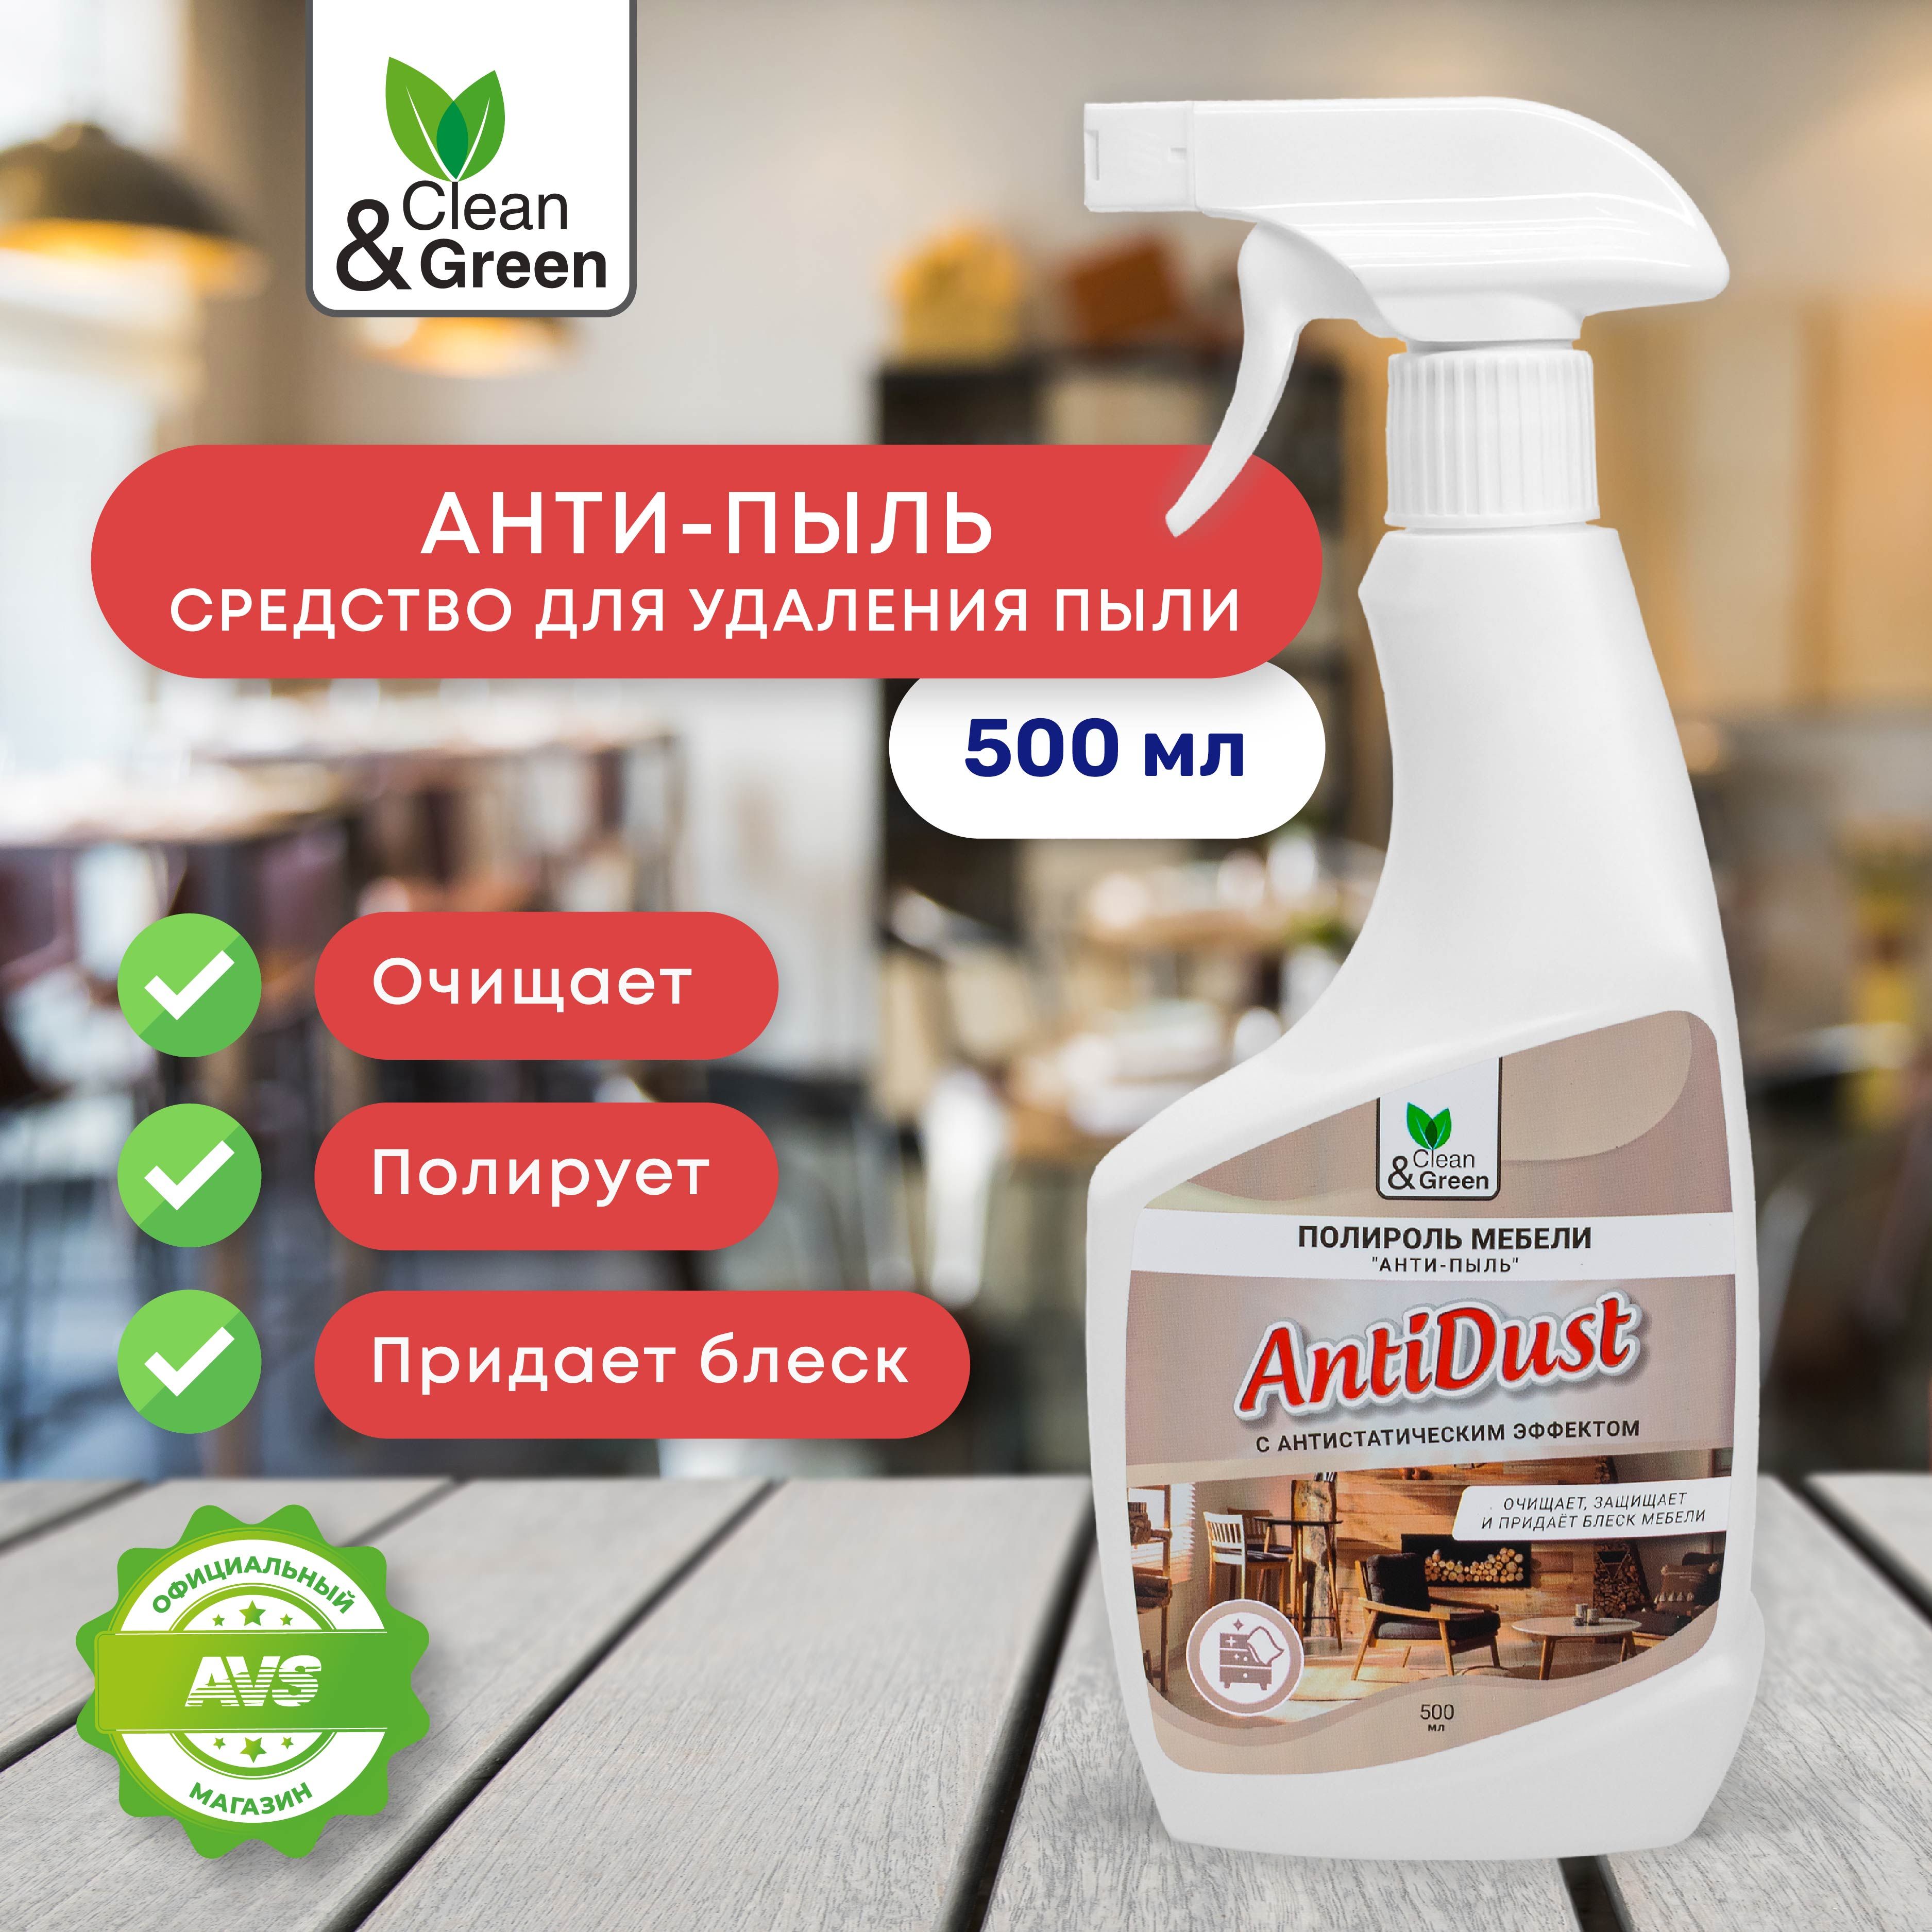 Полирольмебели"Анти-пыль"Antidust,(триггер)500мл.Clean&GreenCG8188